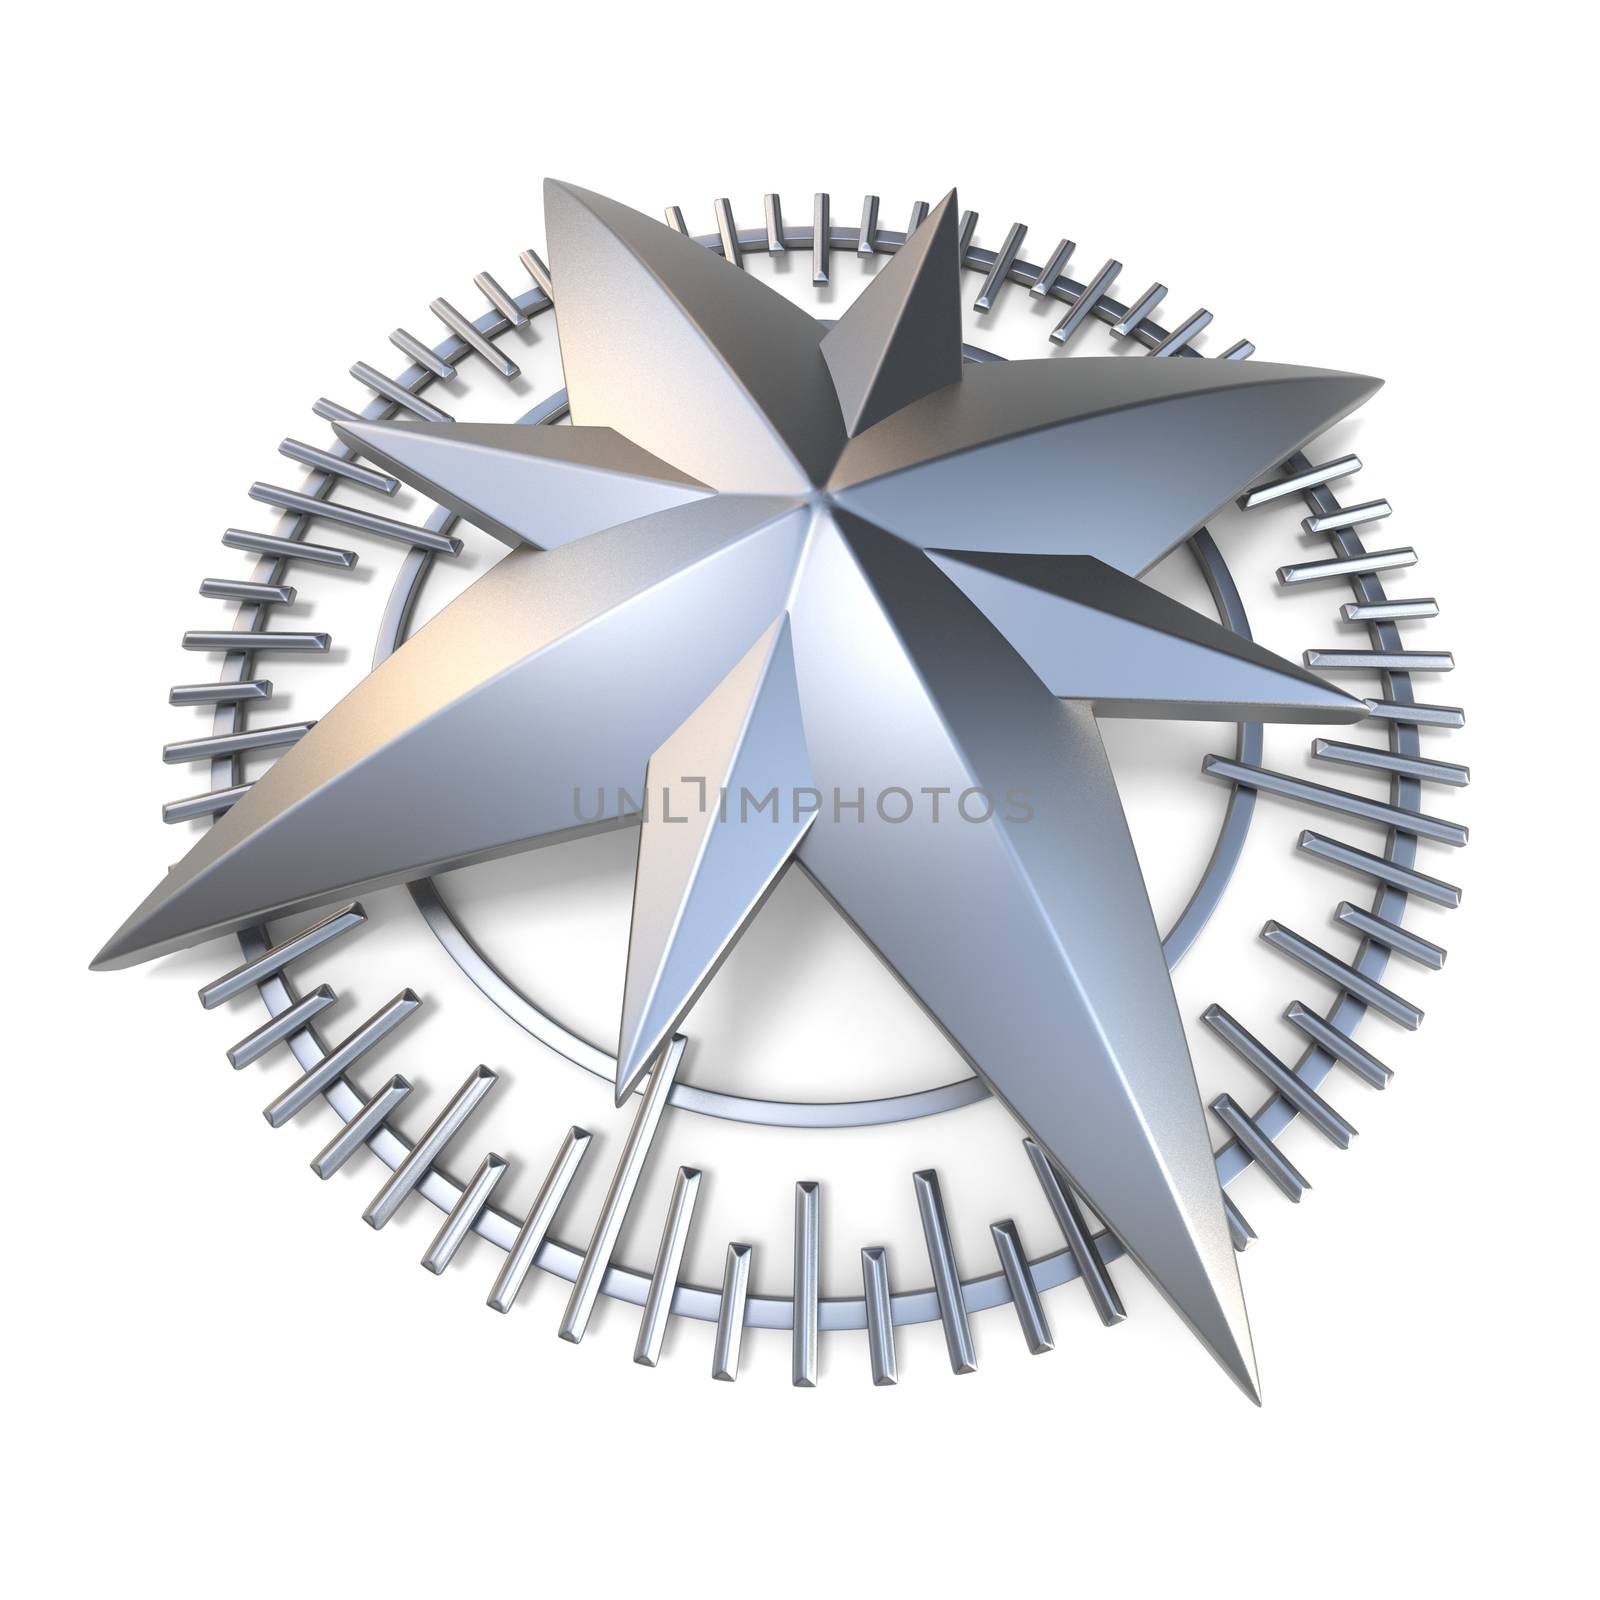 Metallic compass rose 3D by djmilic